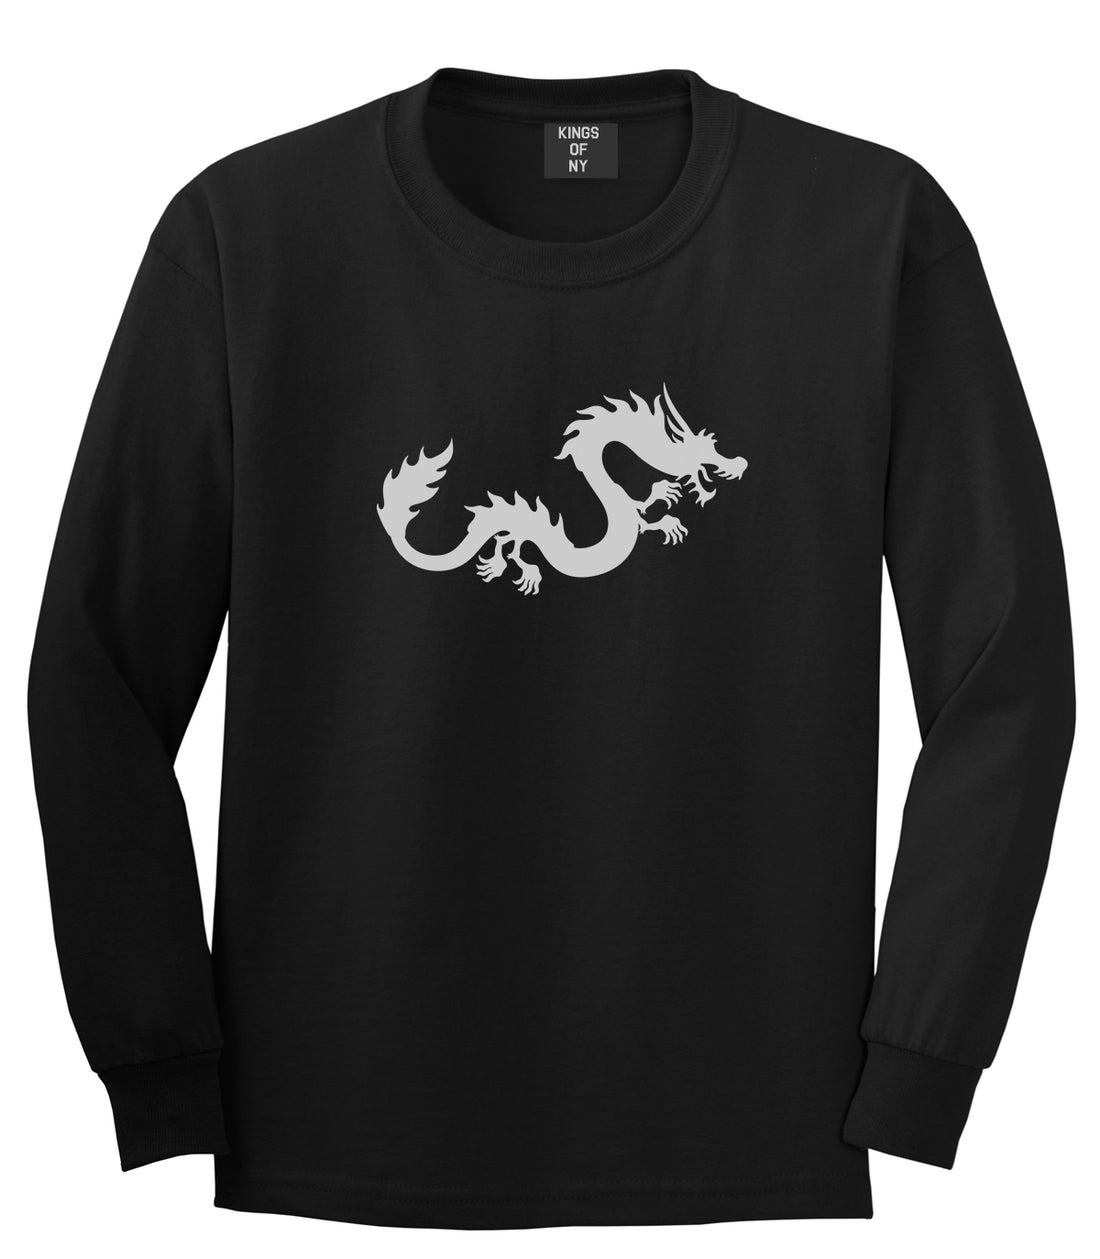 Chinese Dragon Black Long Sleeve T-Shirt by Kings Of NY